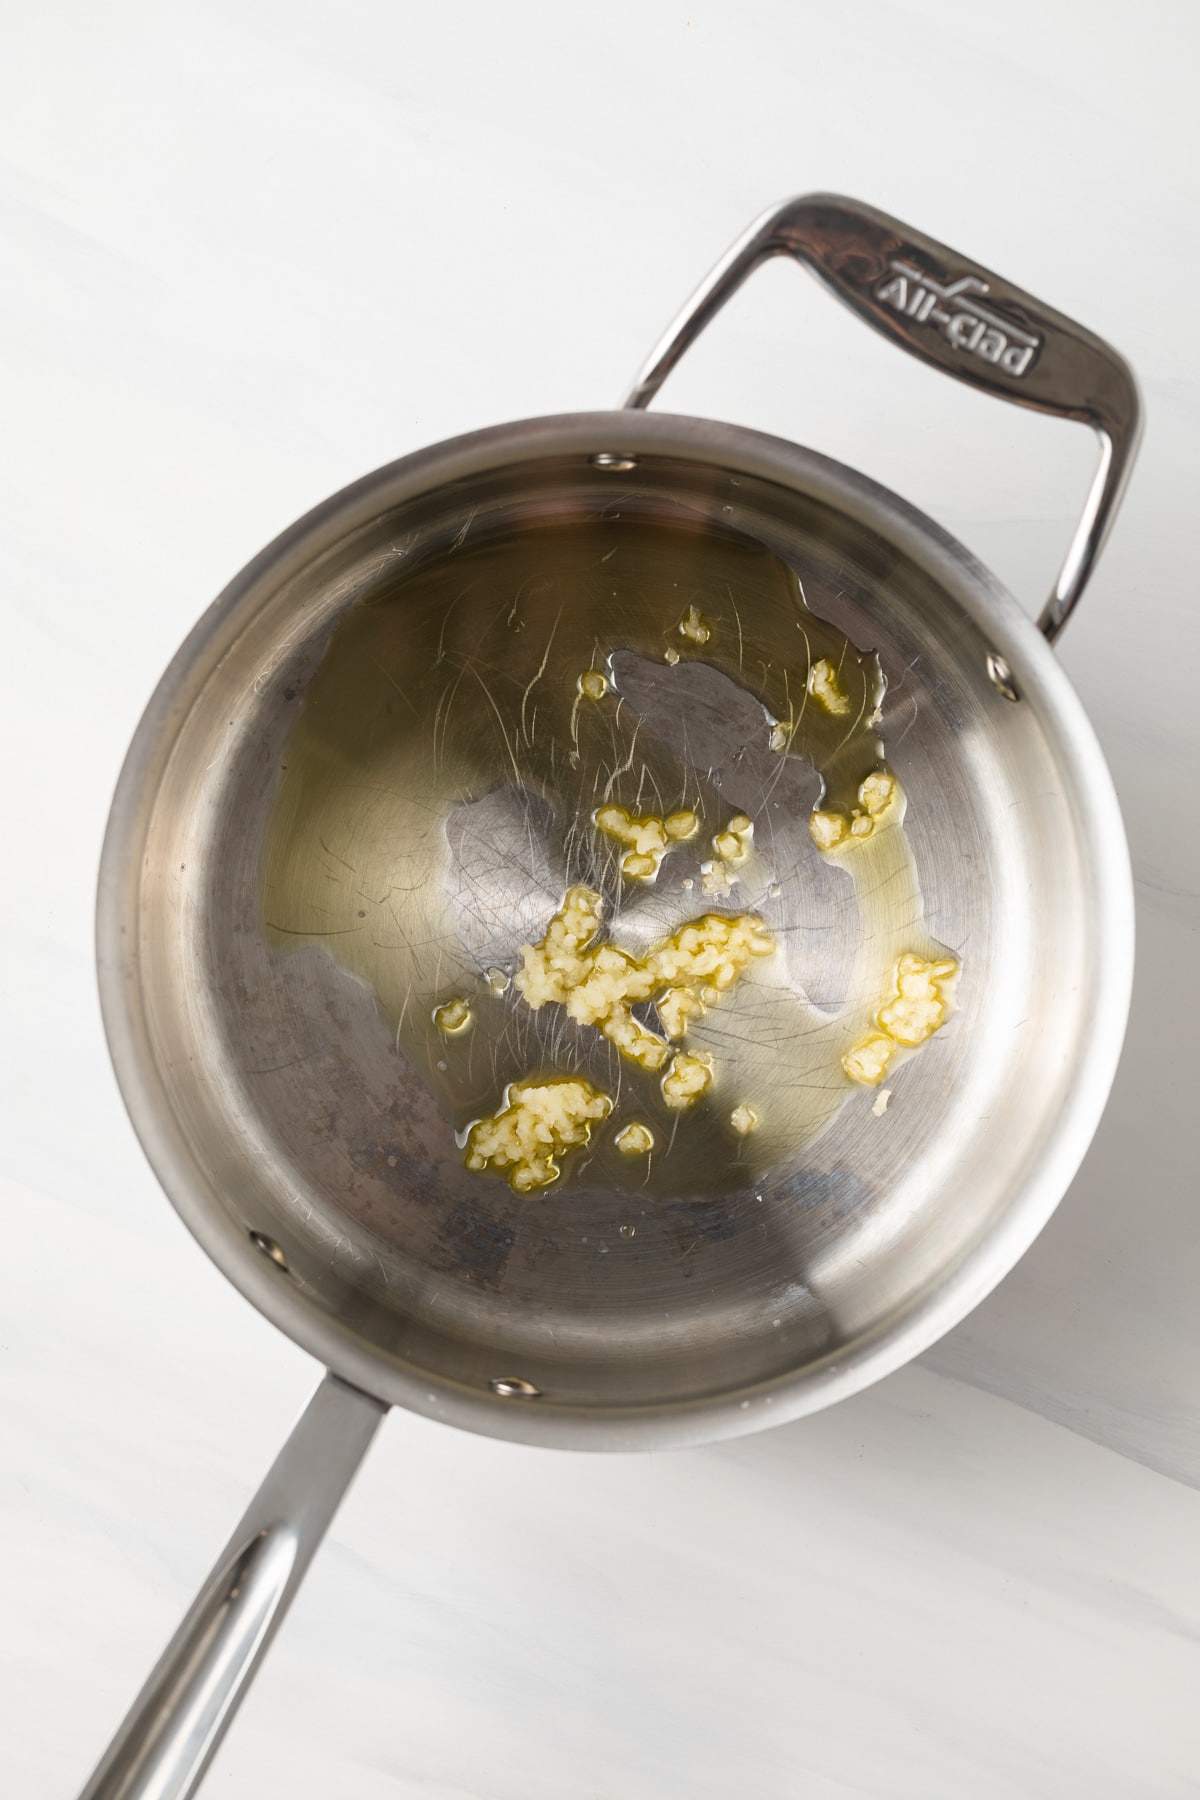 Garlic and oil in a saucepan.